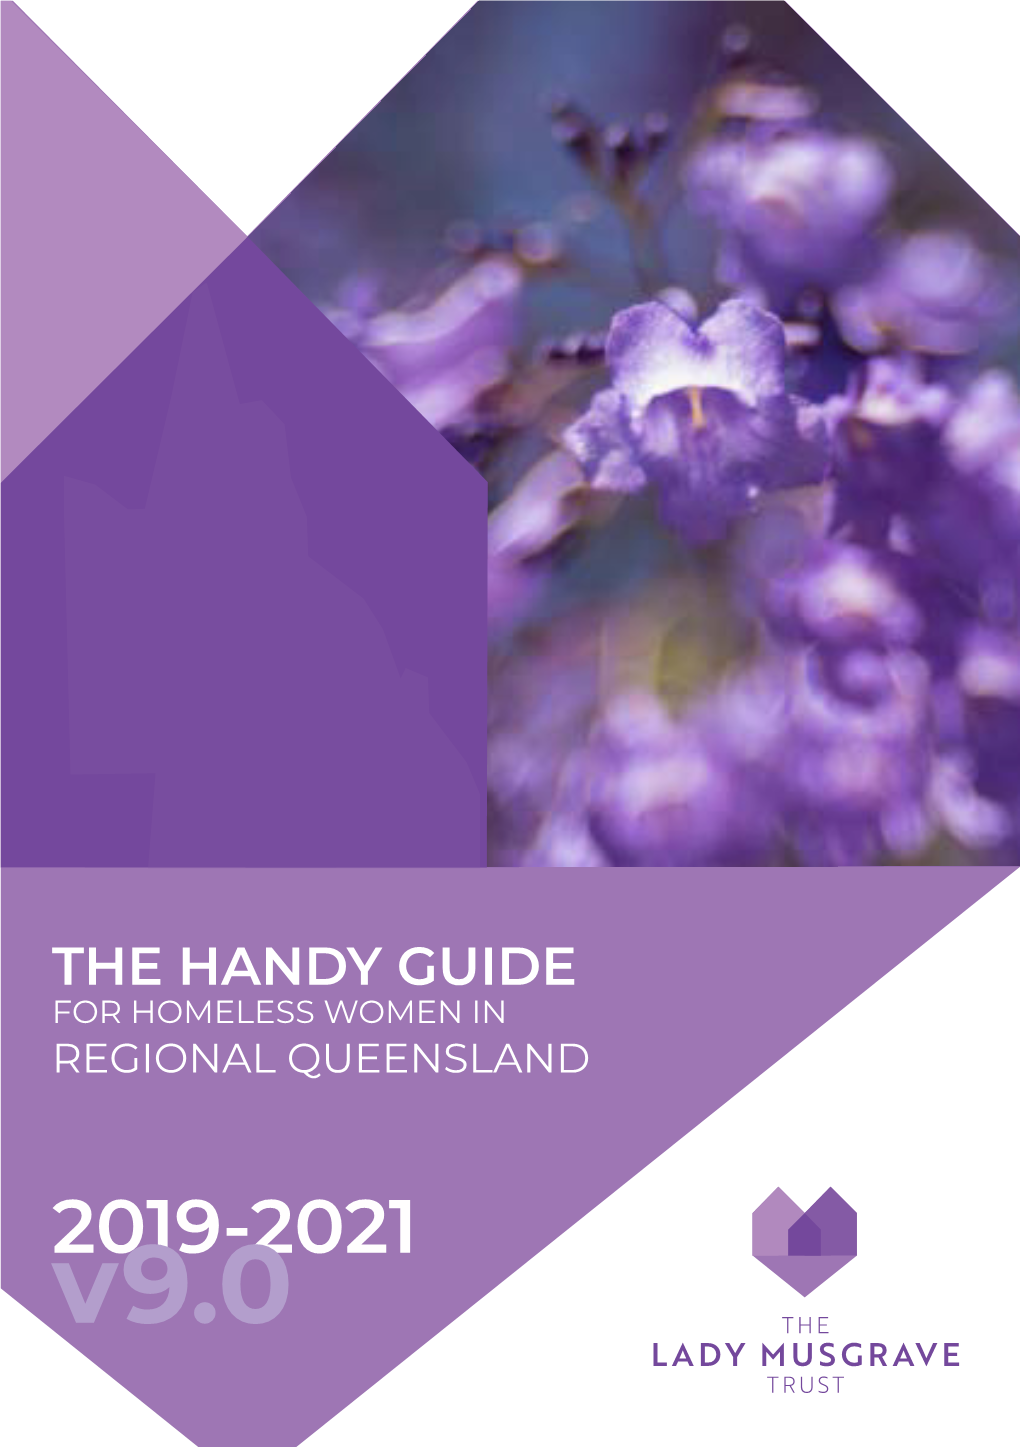 The Handy Guide for Homeless Women in Regional Queensland